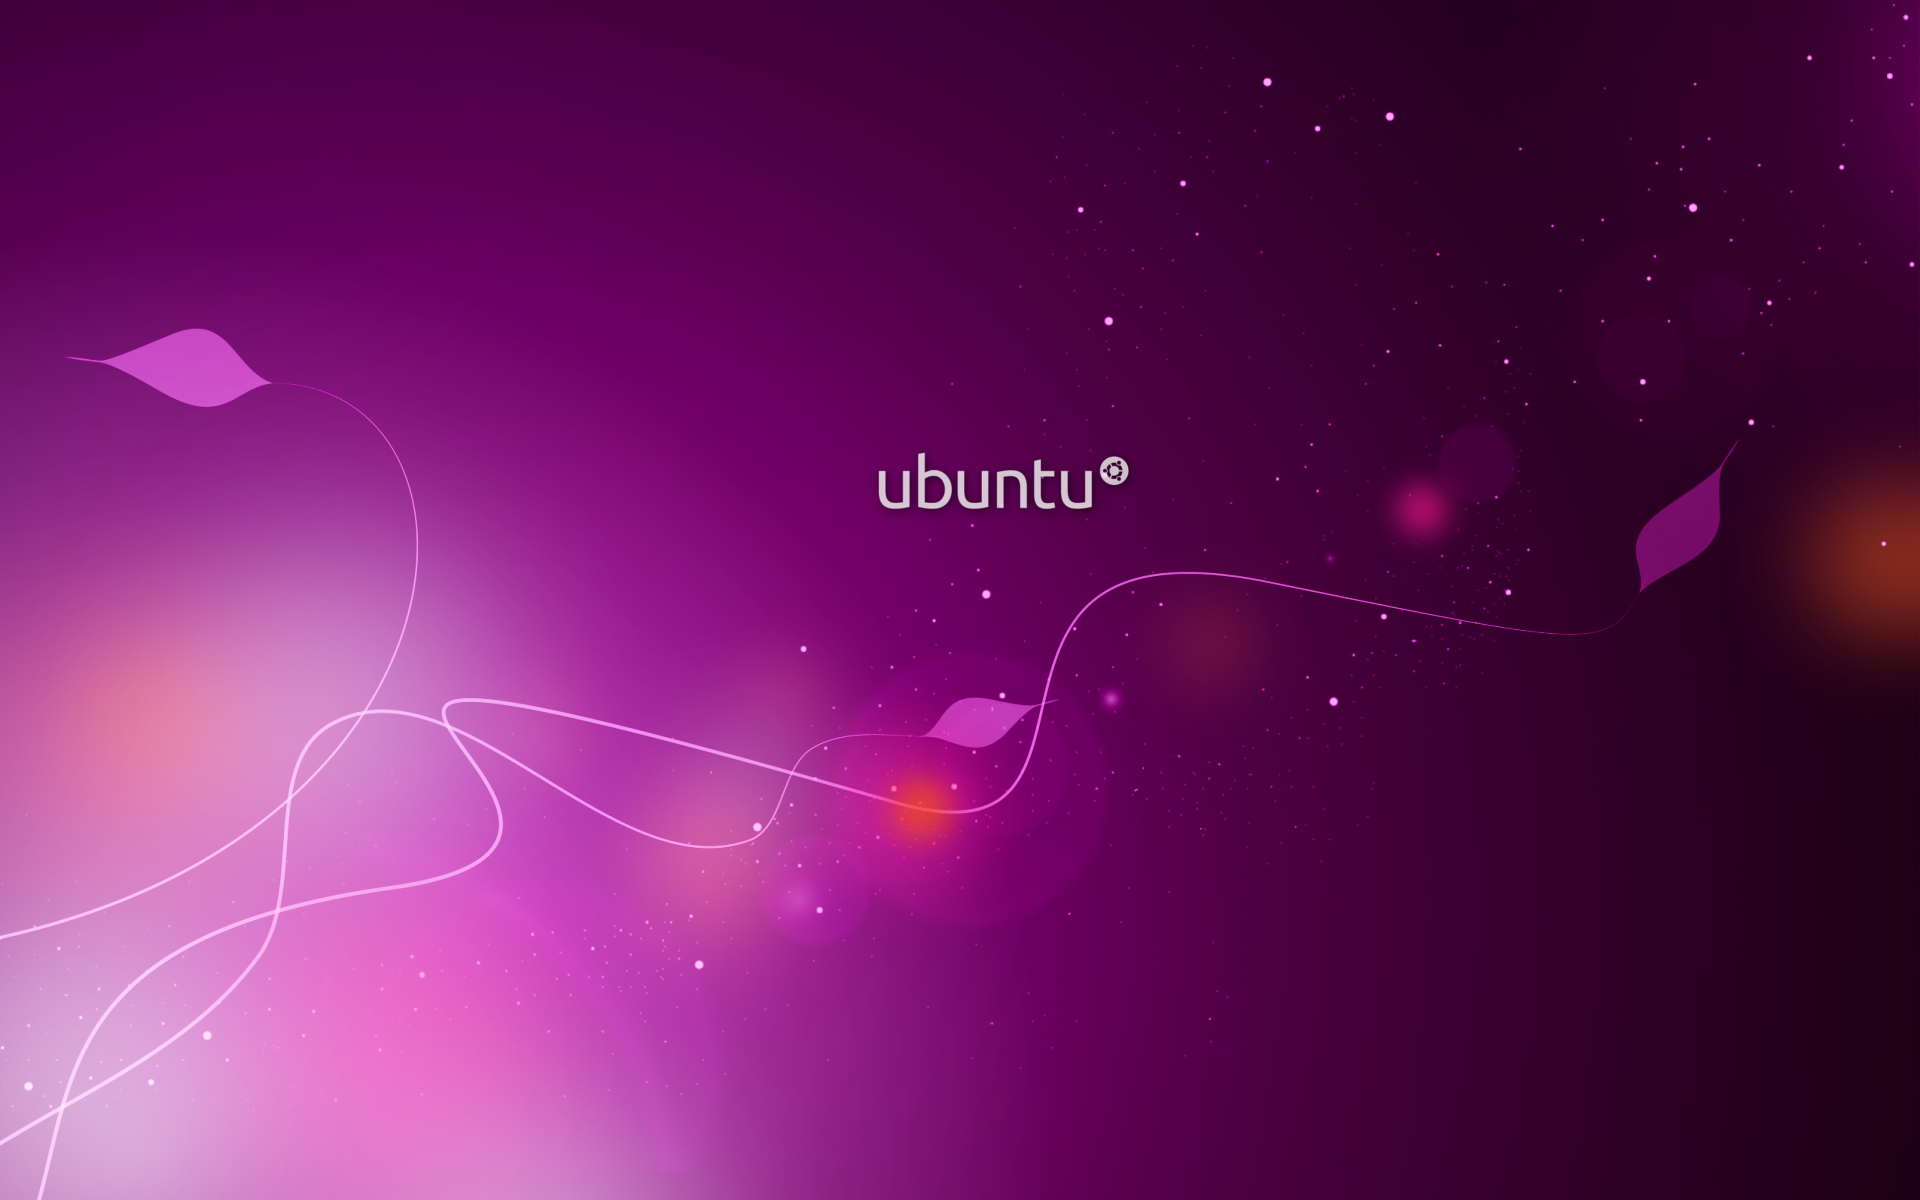 ubuntu wallpaper purple